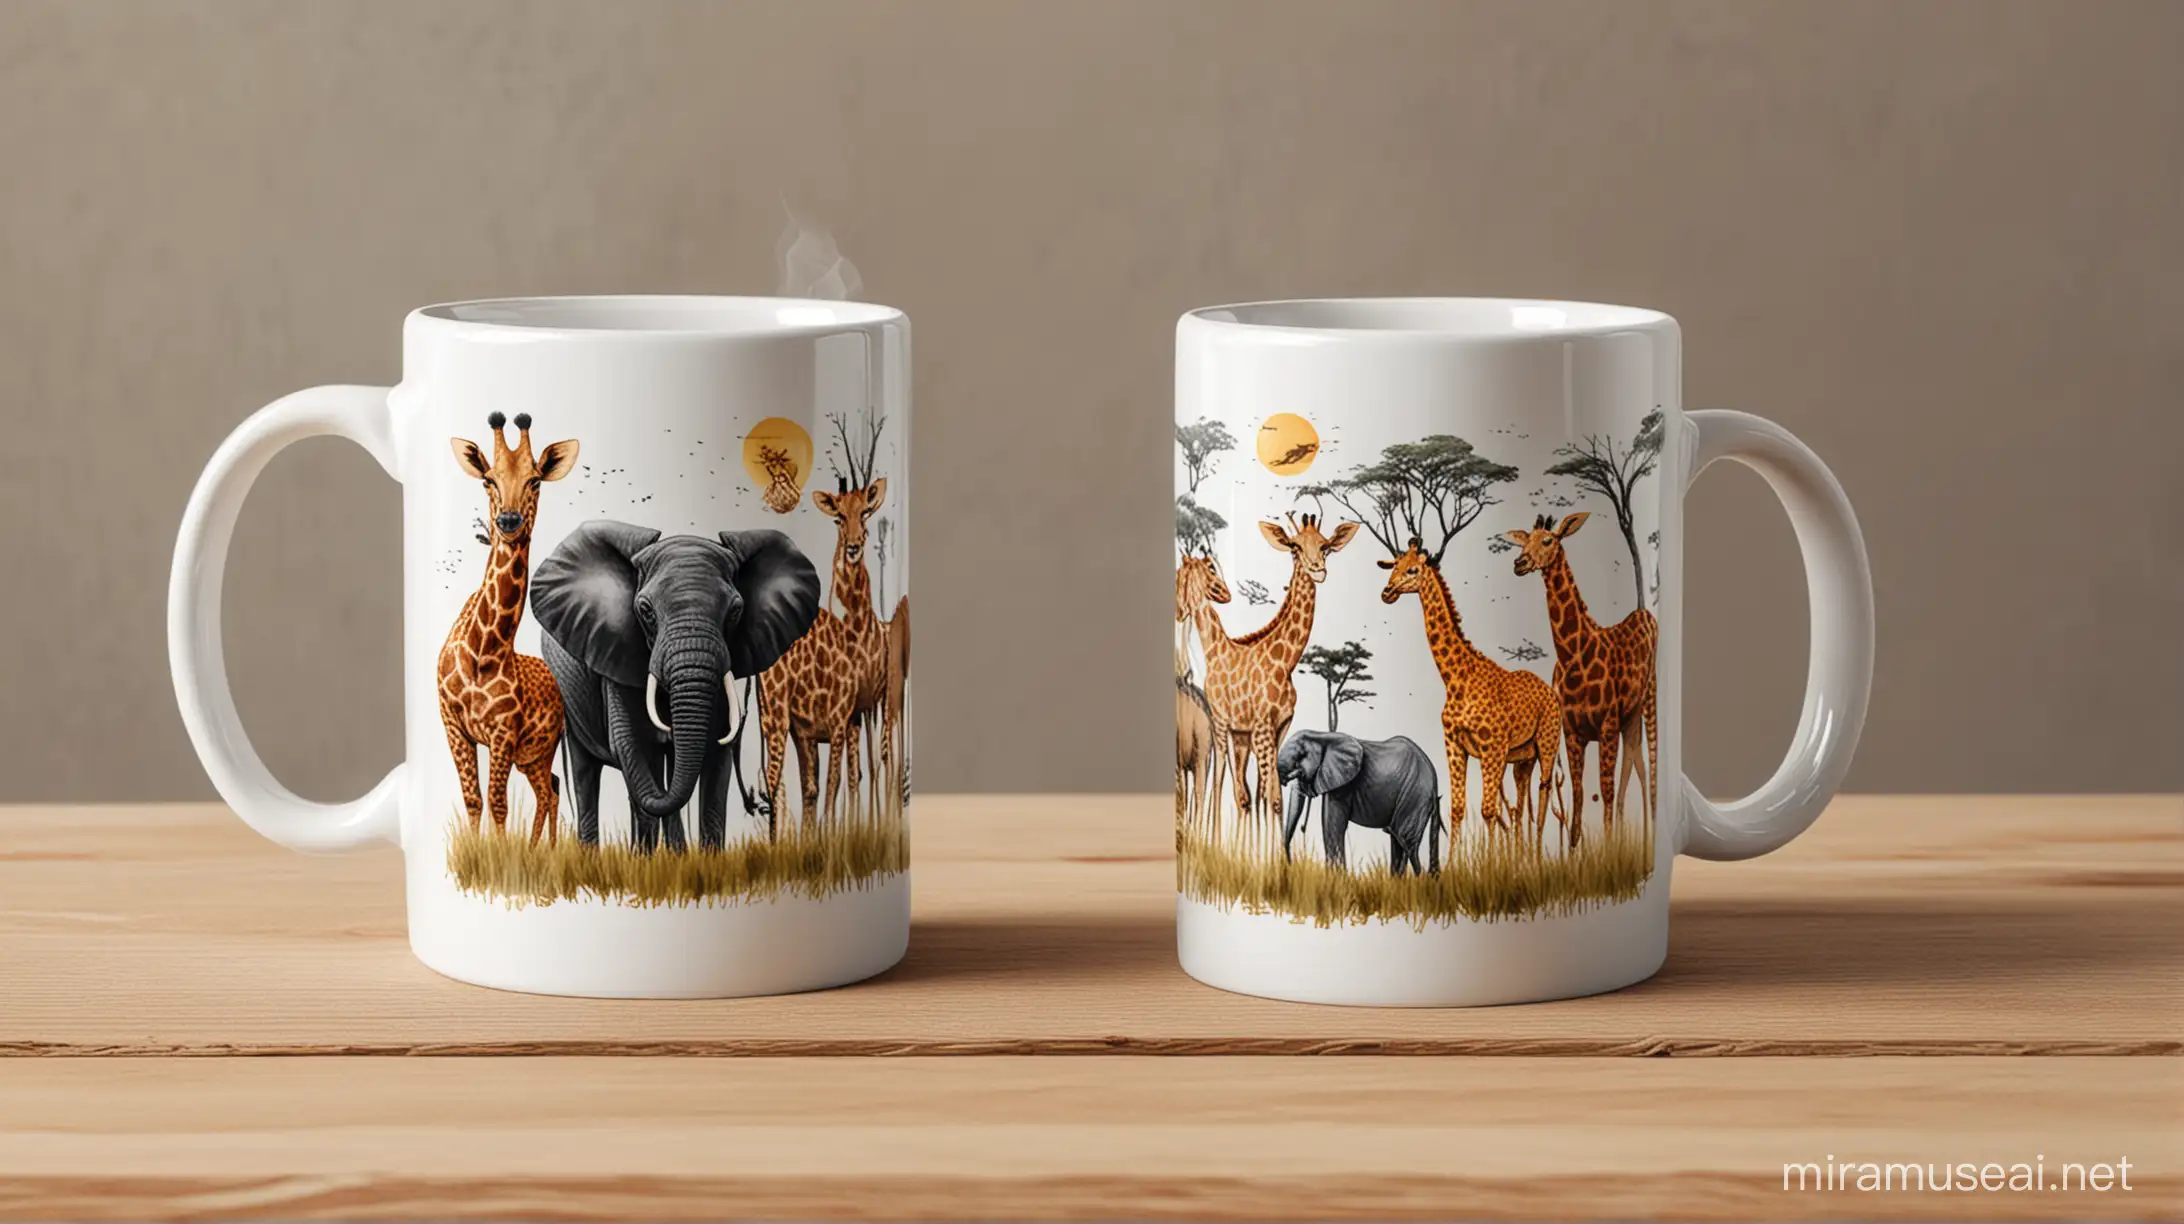 African animals on a coffee mug drinking coffee.